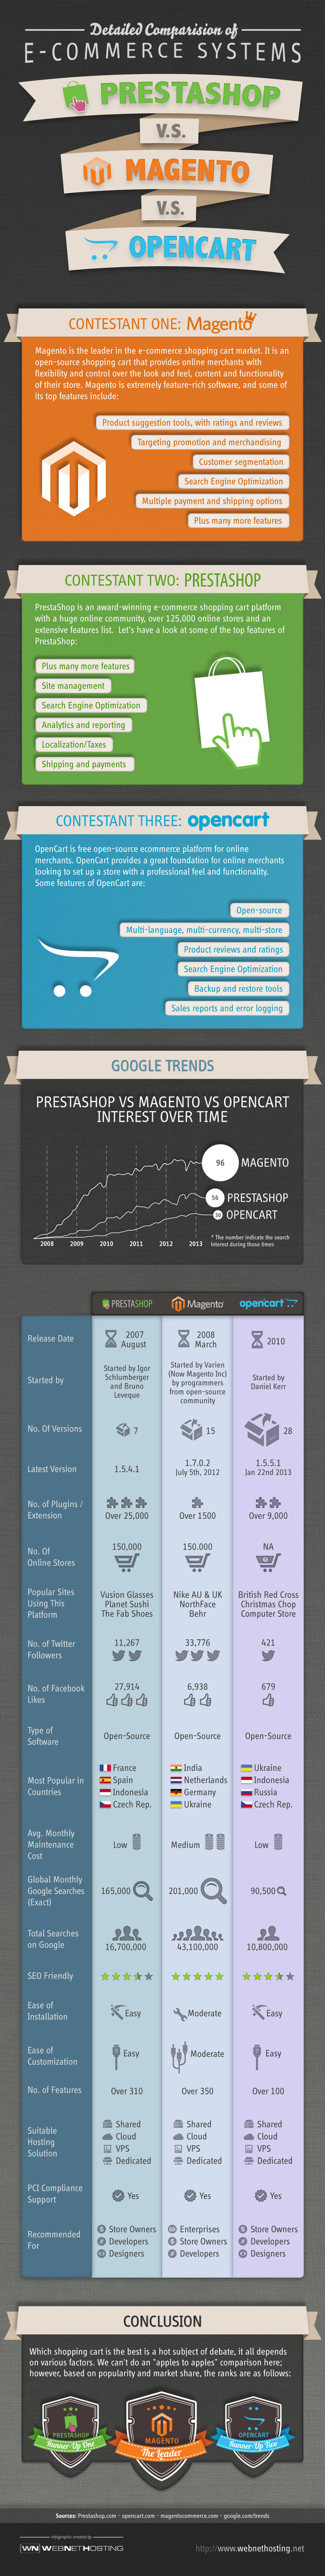 prestashop vs magento vs opencart infographic